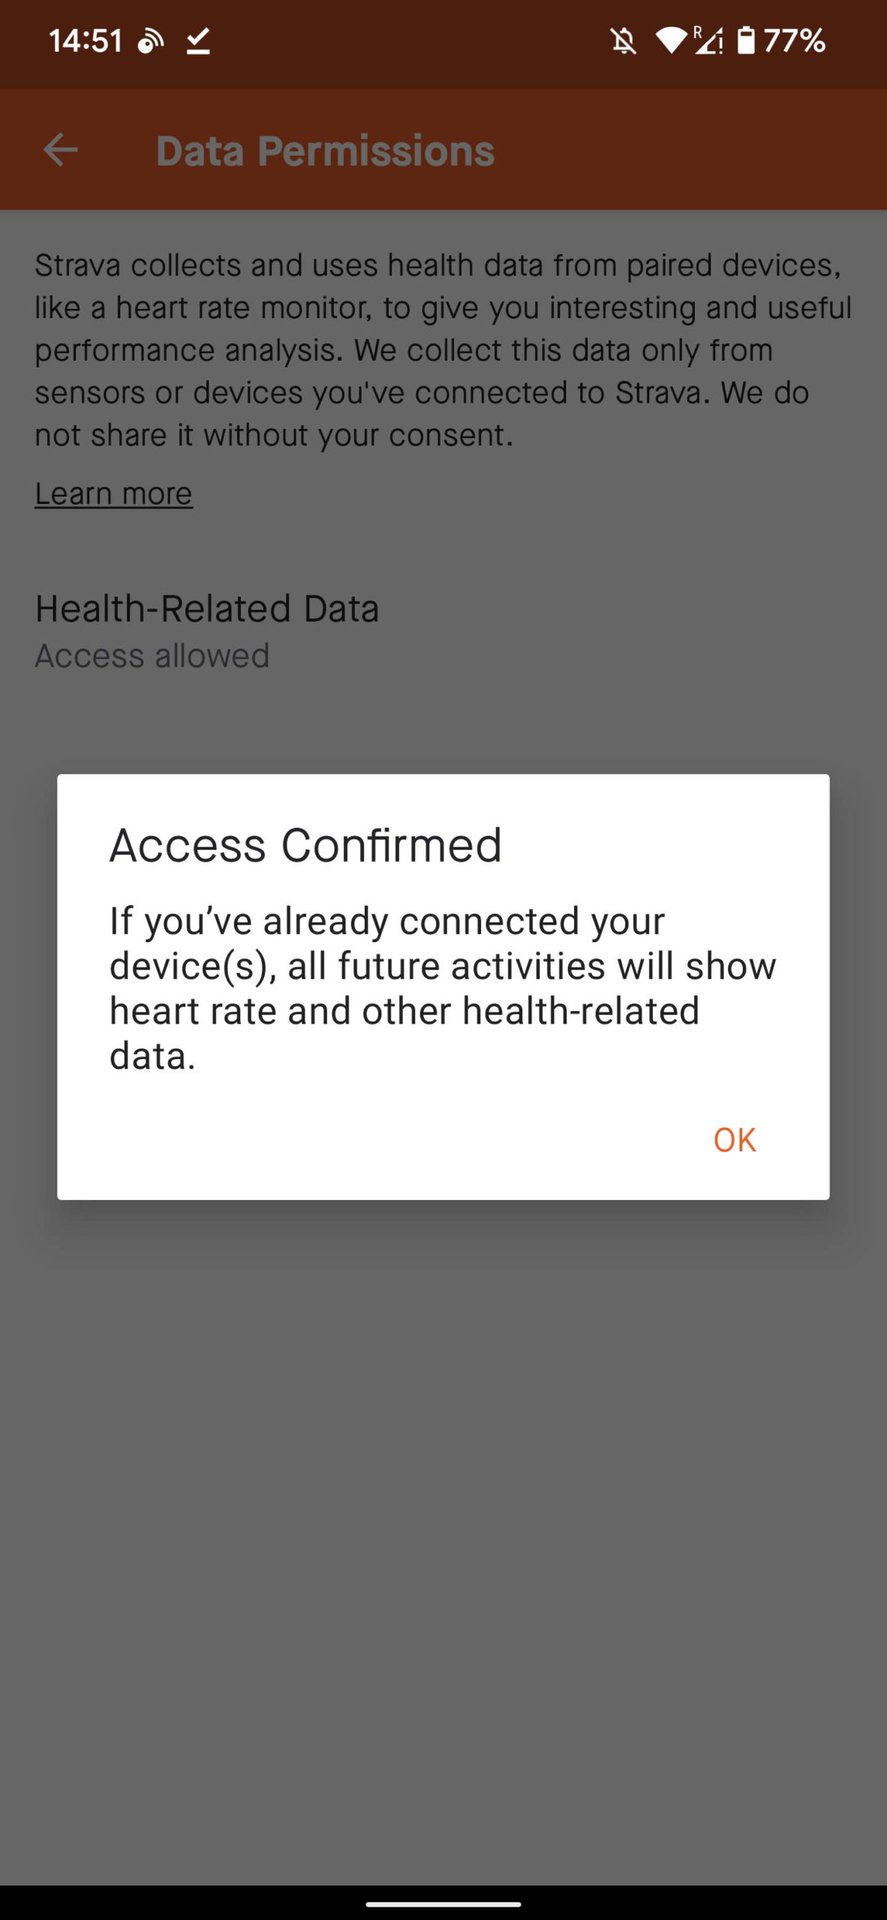 Strava health related data sharing allowed